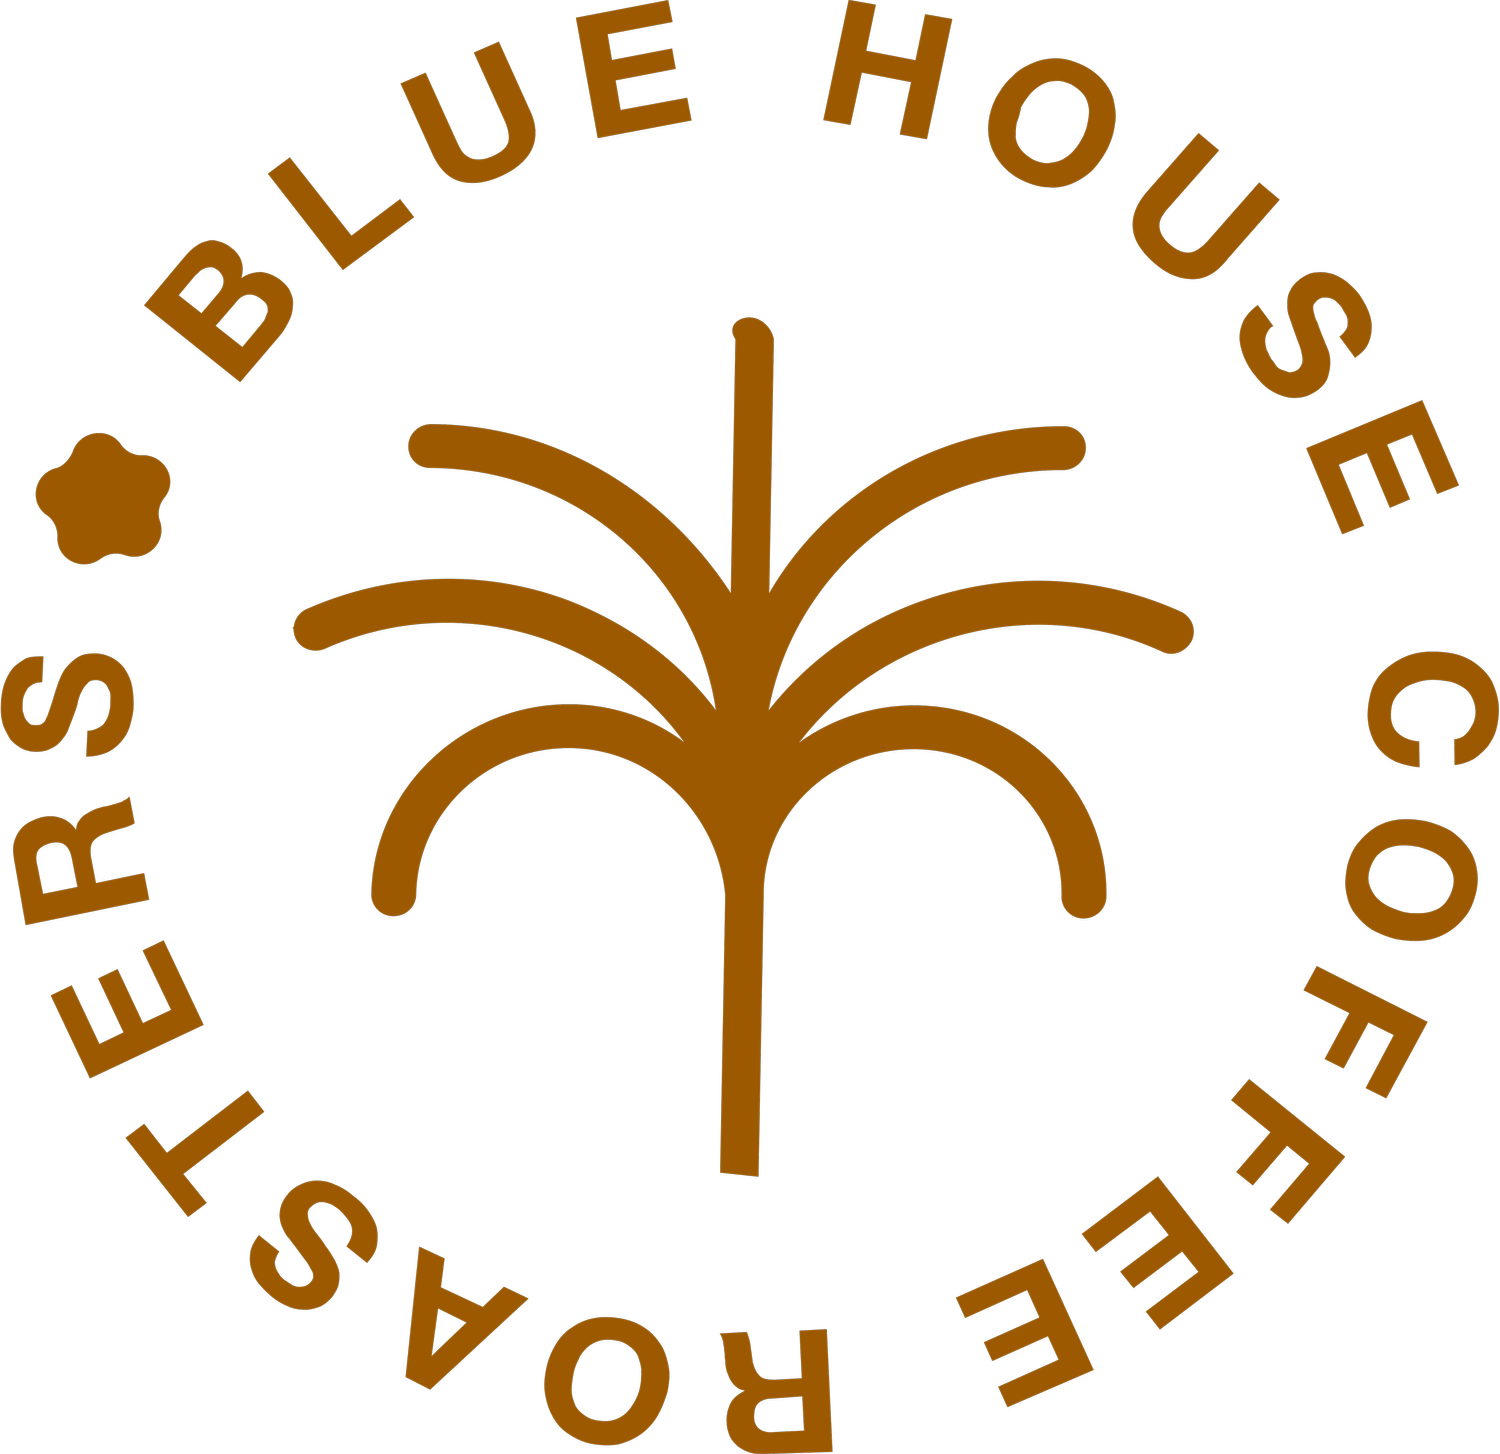 Blue House Coffee